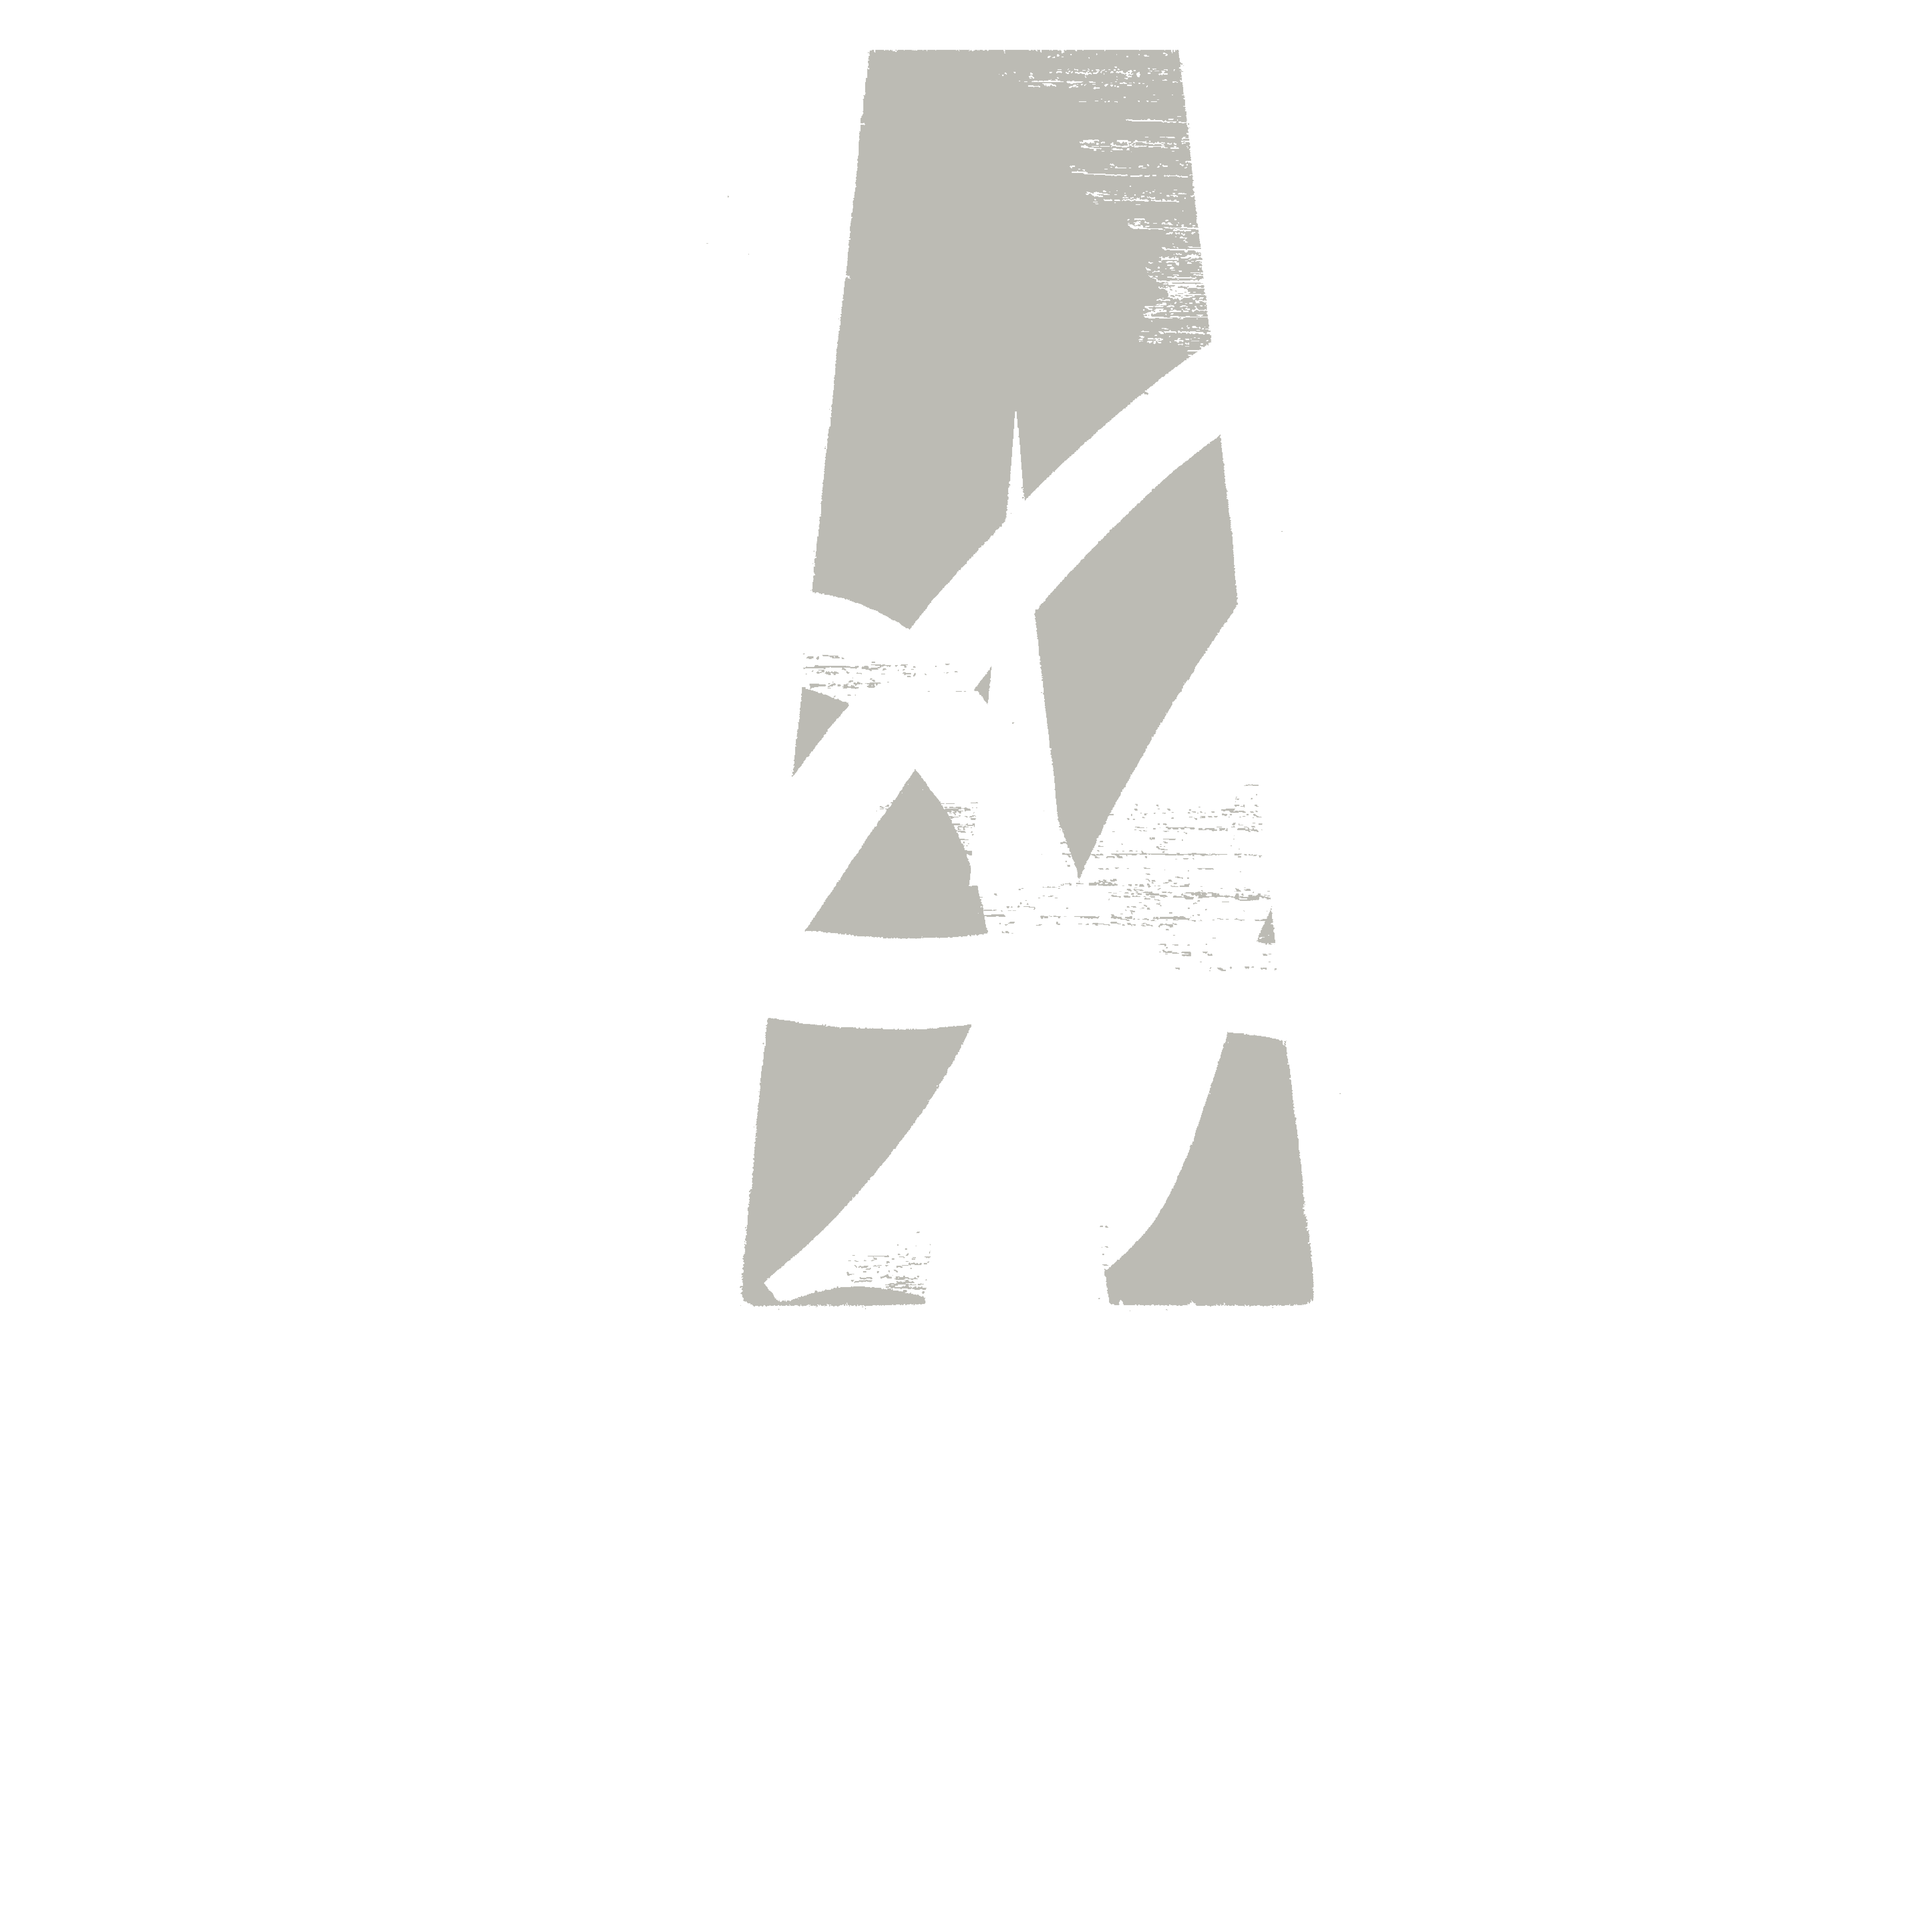 Archivist - The Persuasiveness of Quality